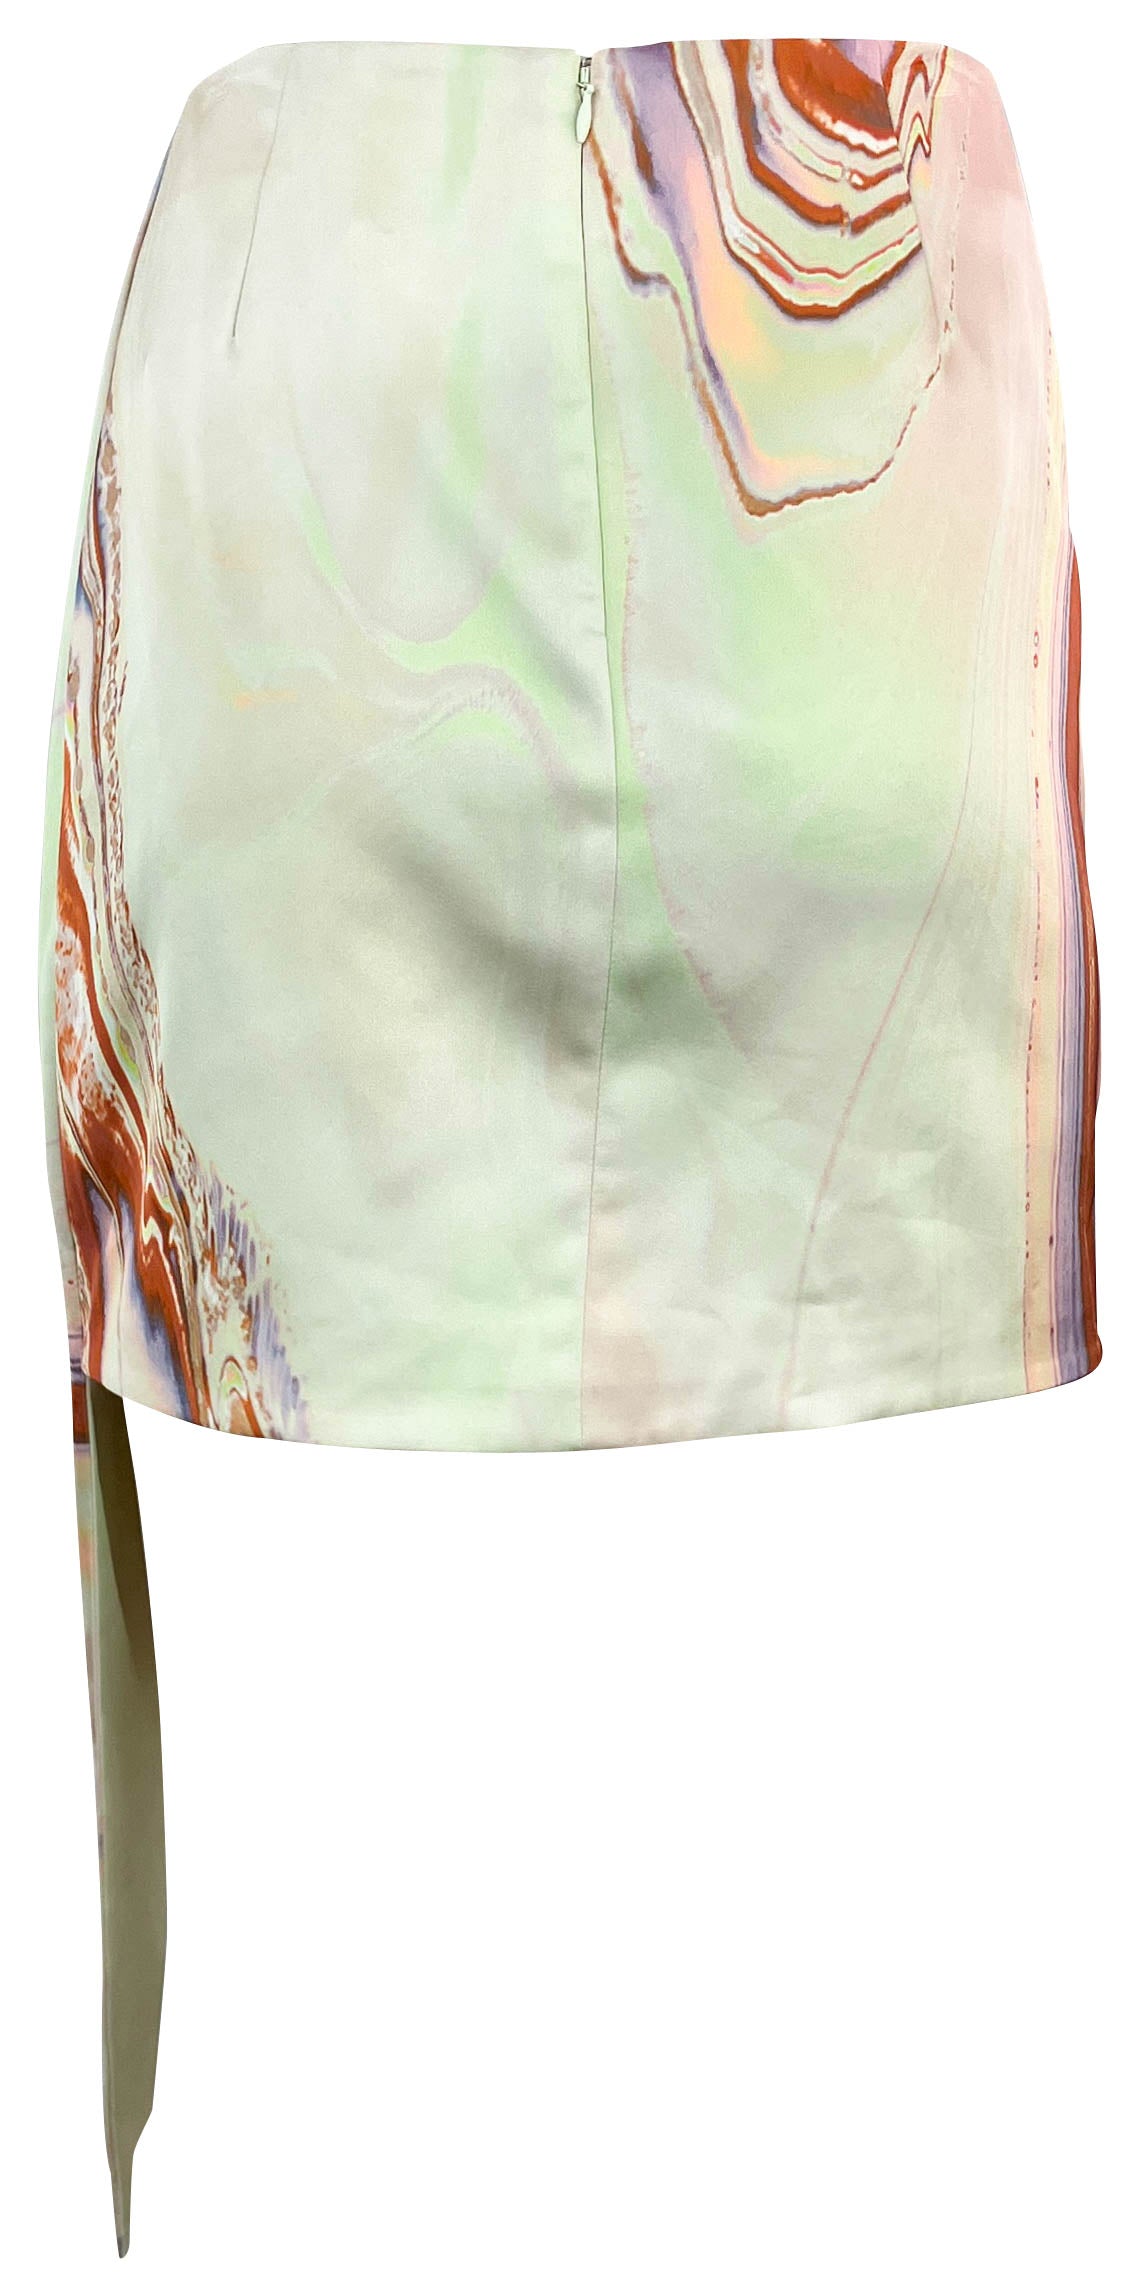 Jonathan Simkhai Mini Skirt in Seafoam Marble Print - Discounts on Jonathan Simkhai at UAL